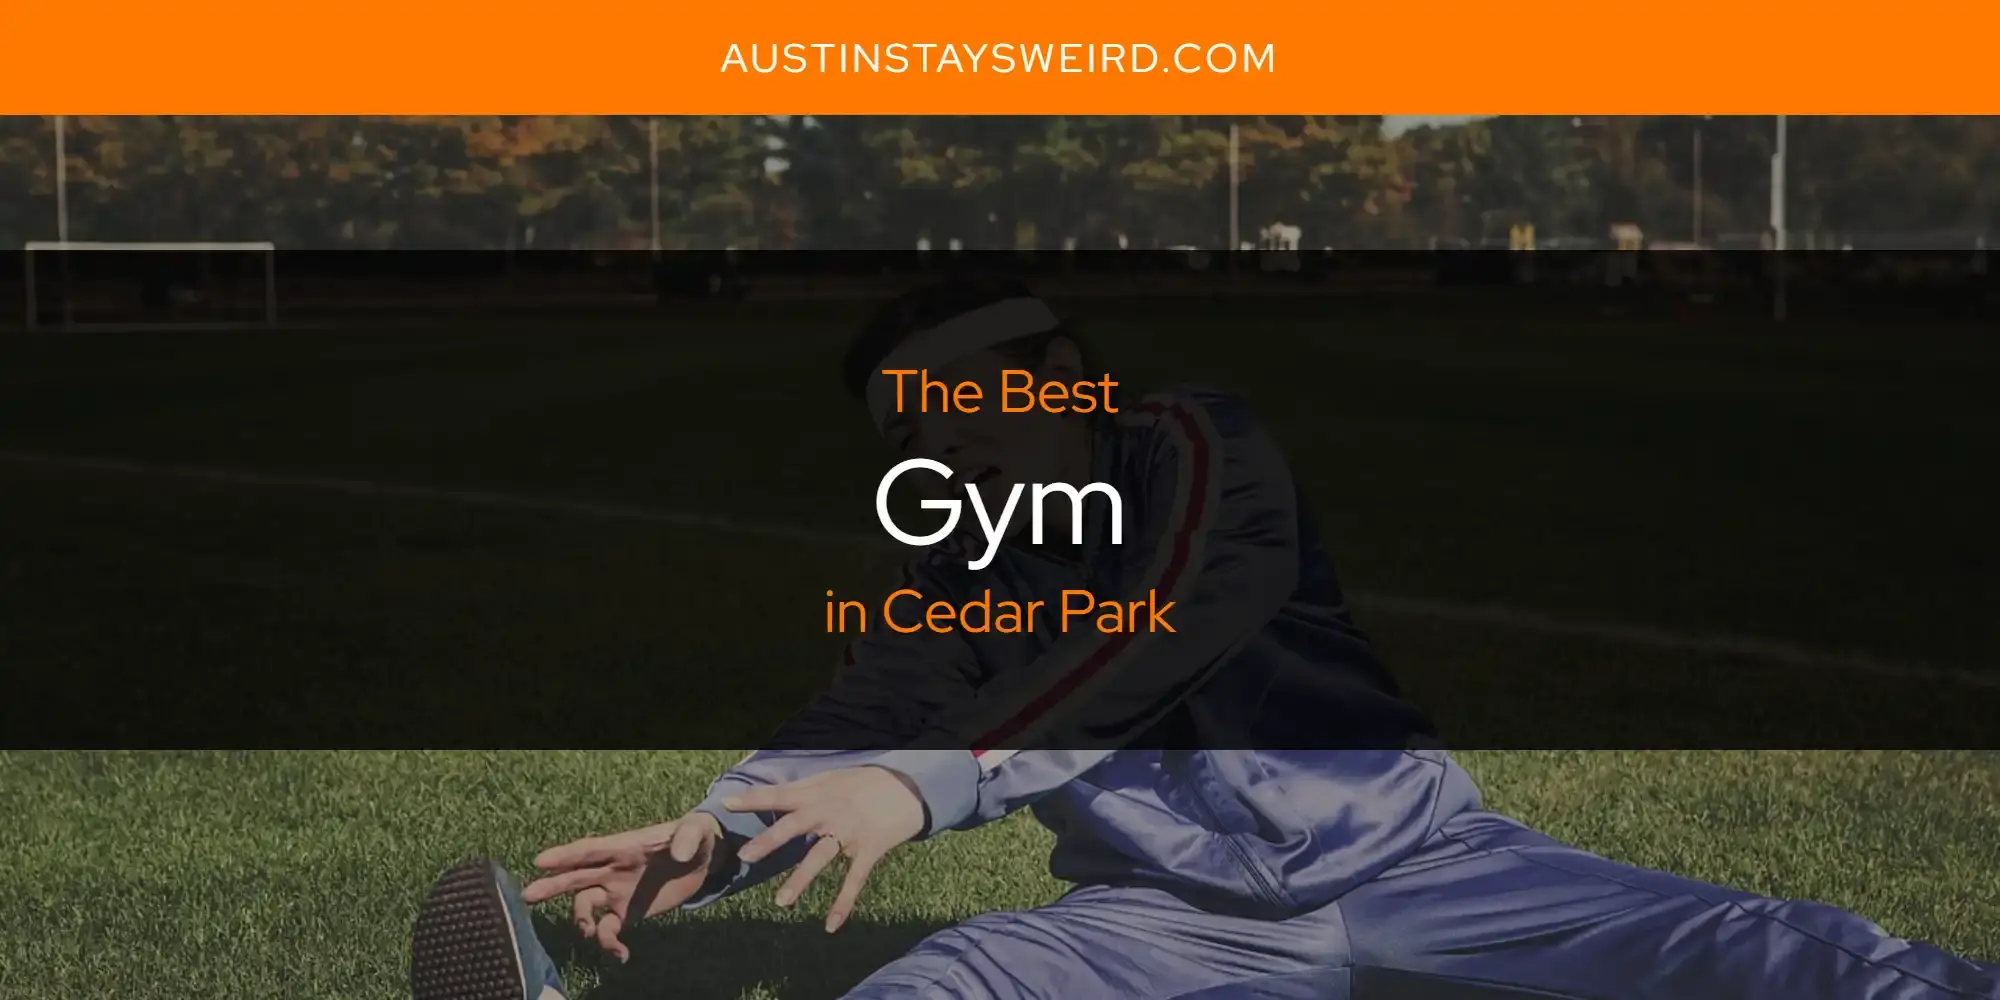 Best Gym in Cedar Park? Here's the Top 8